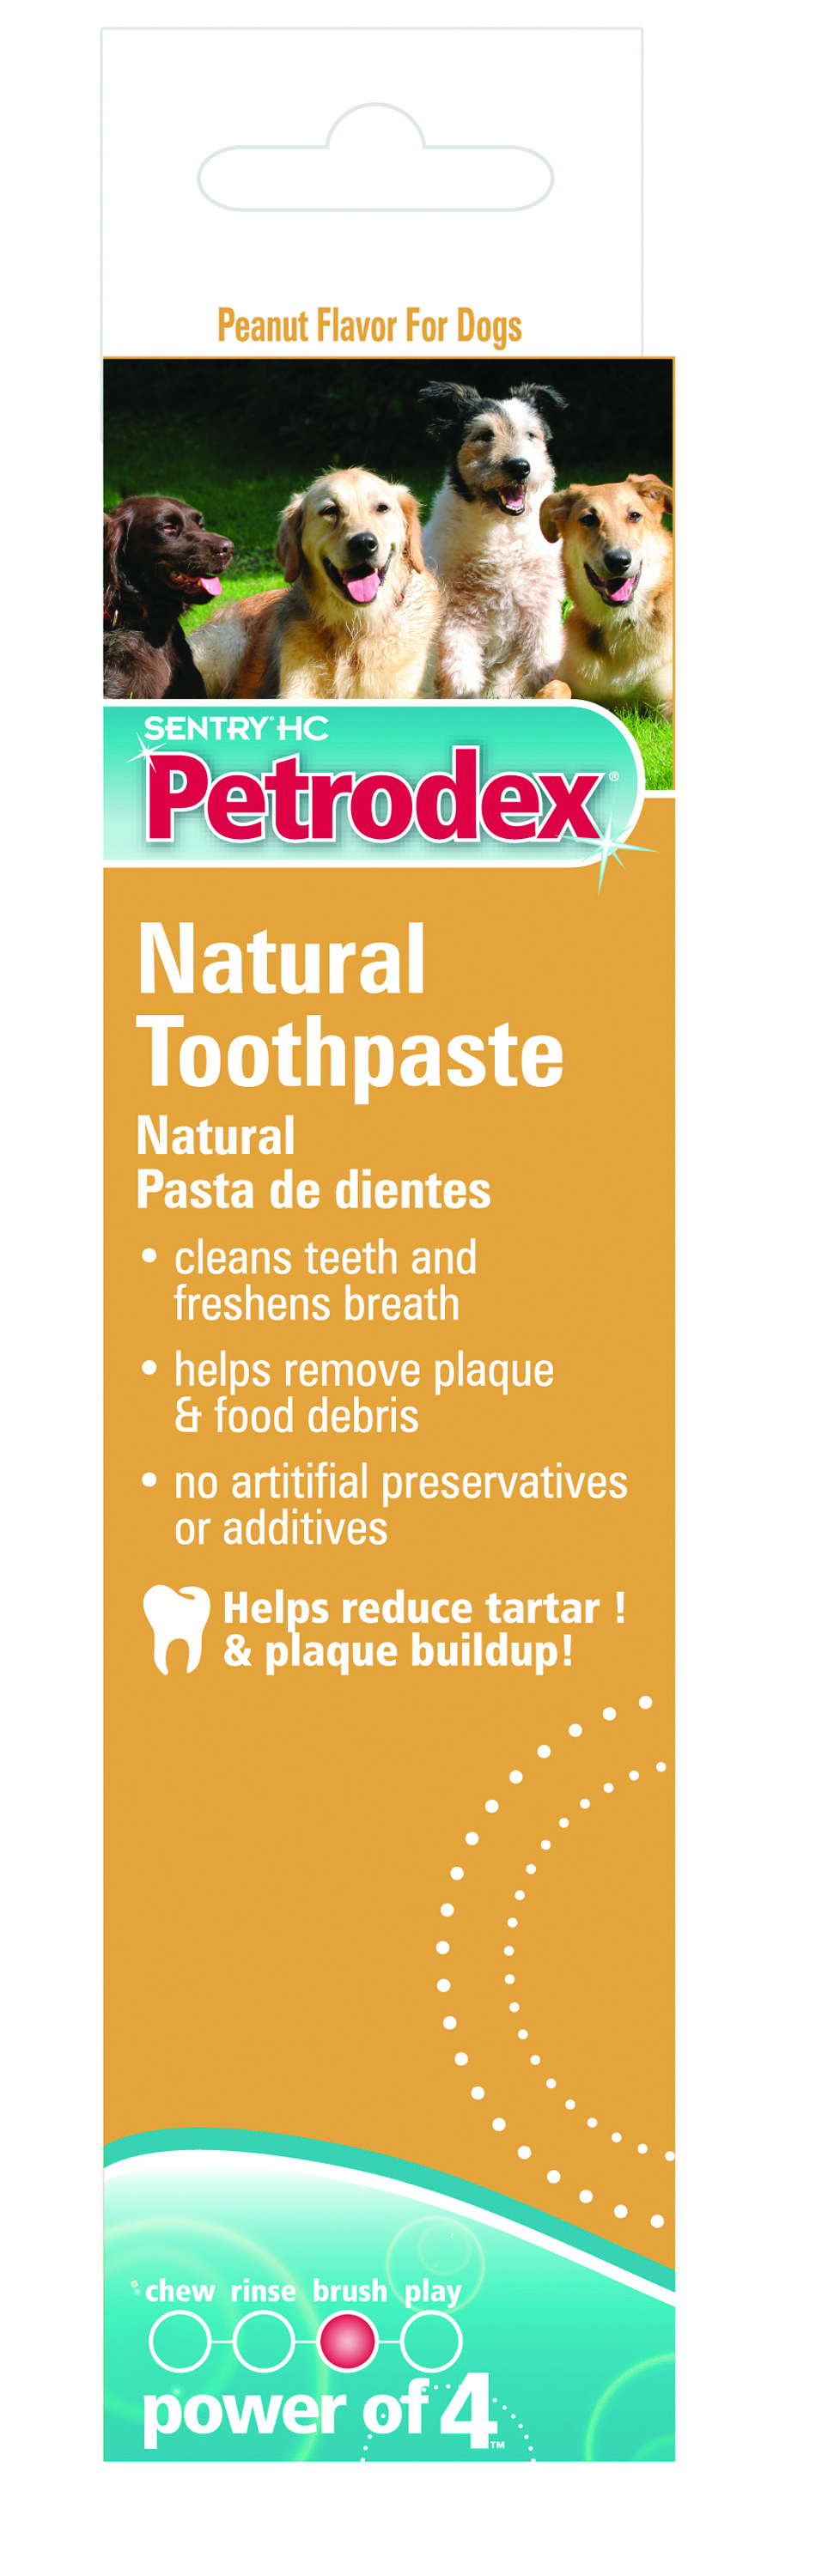 Natural Toothpaste/Toothbrush Dental Kit - Peanut Butter Flavor